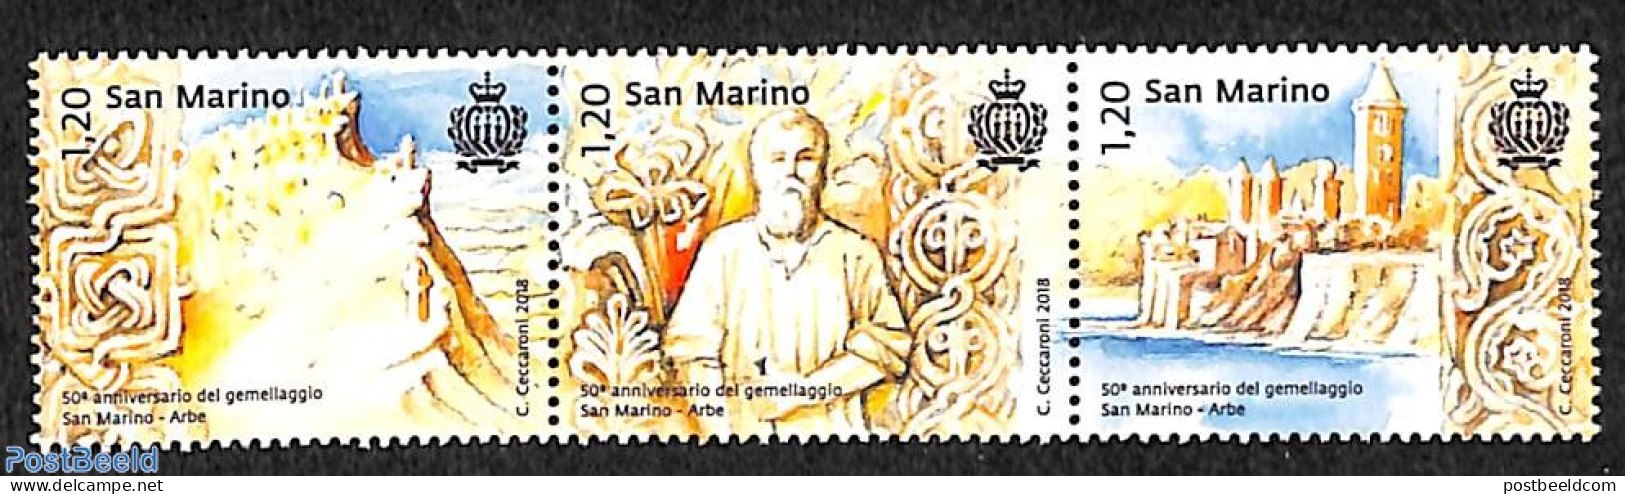 San Marino 2018 San Marino-Arbe 3v [::], Mint NH - Unused Stamps